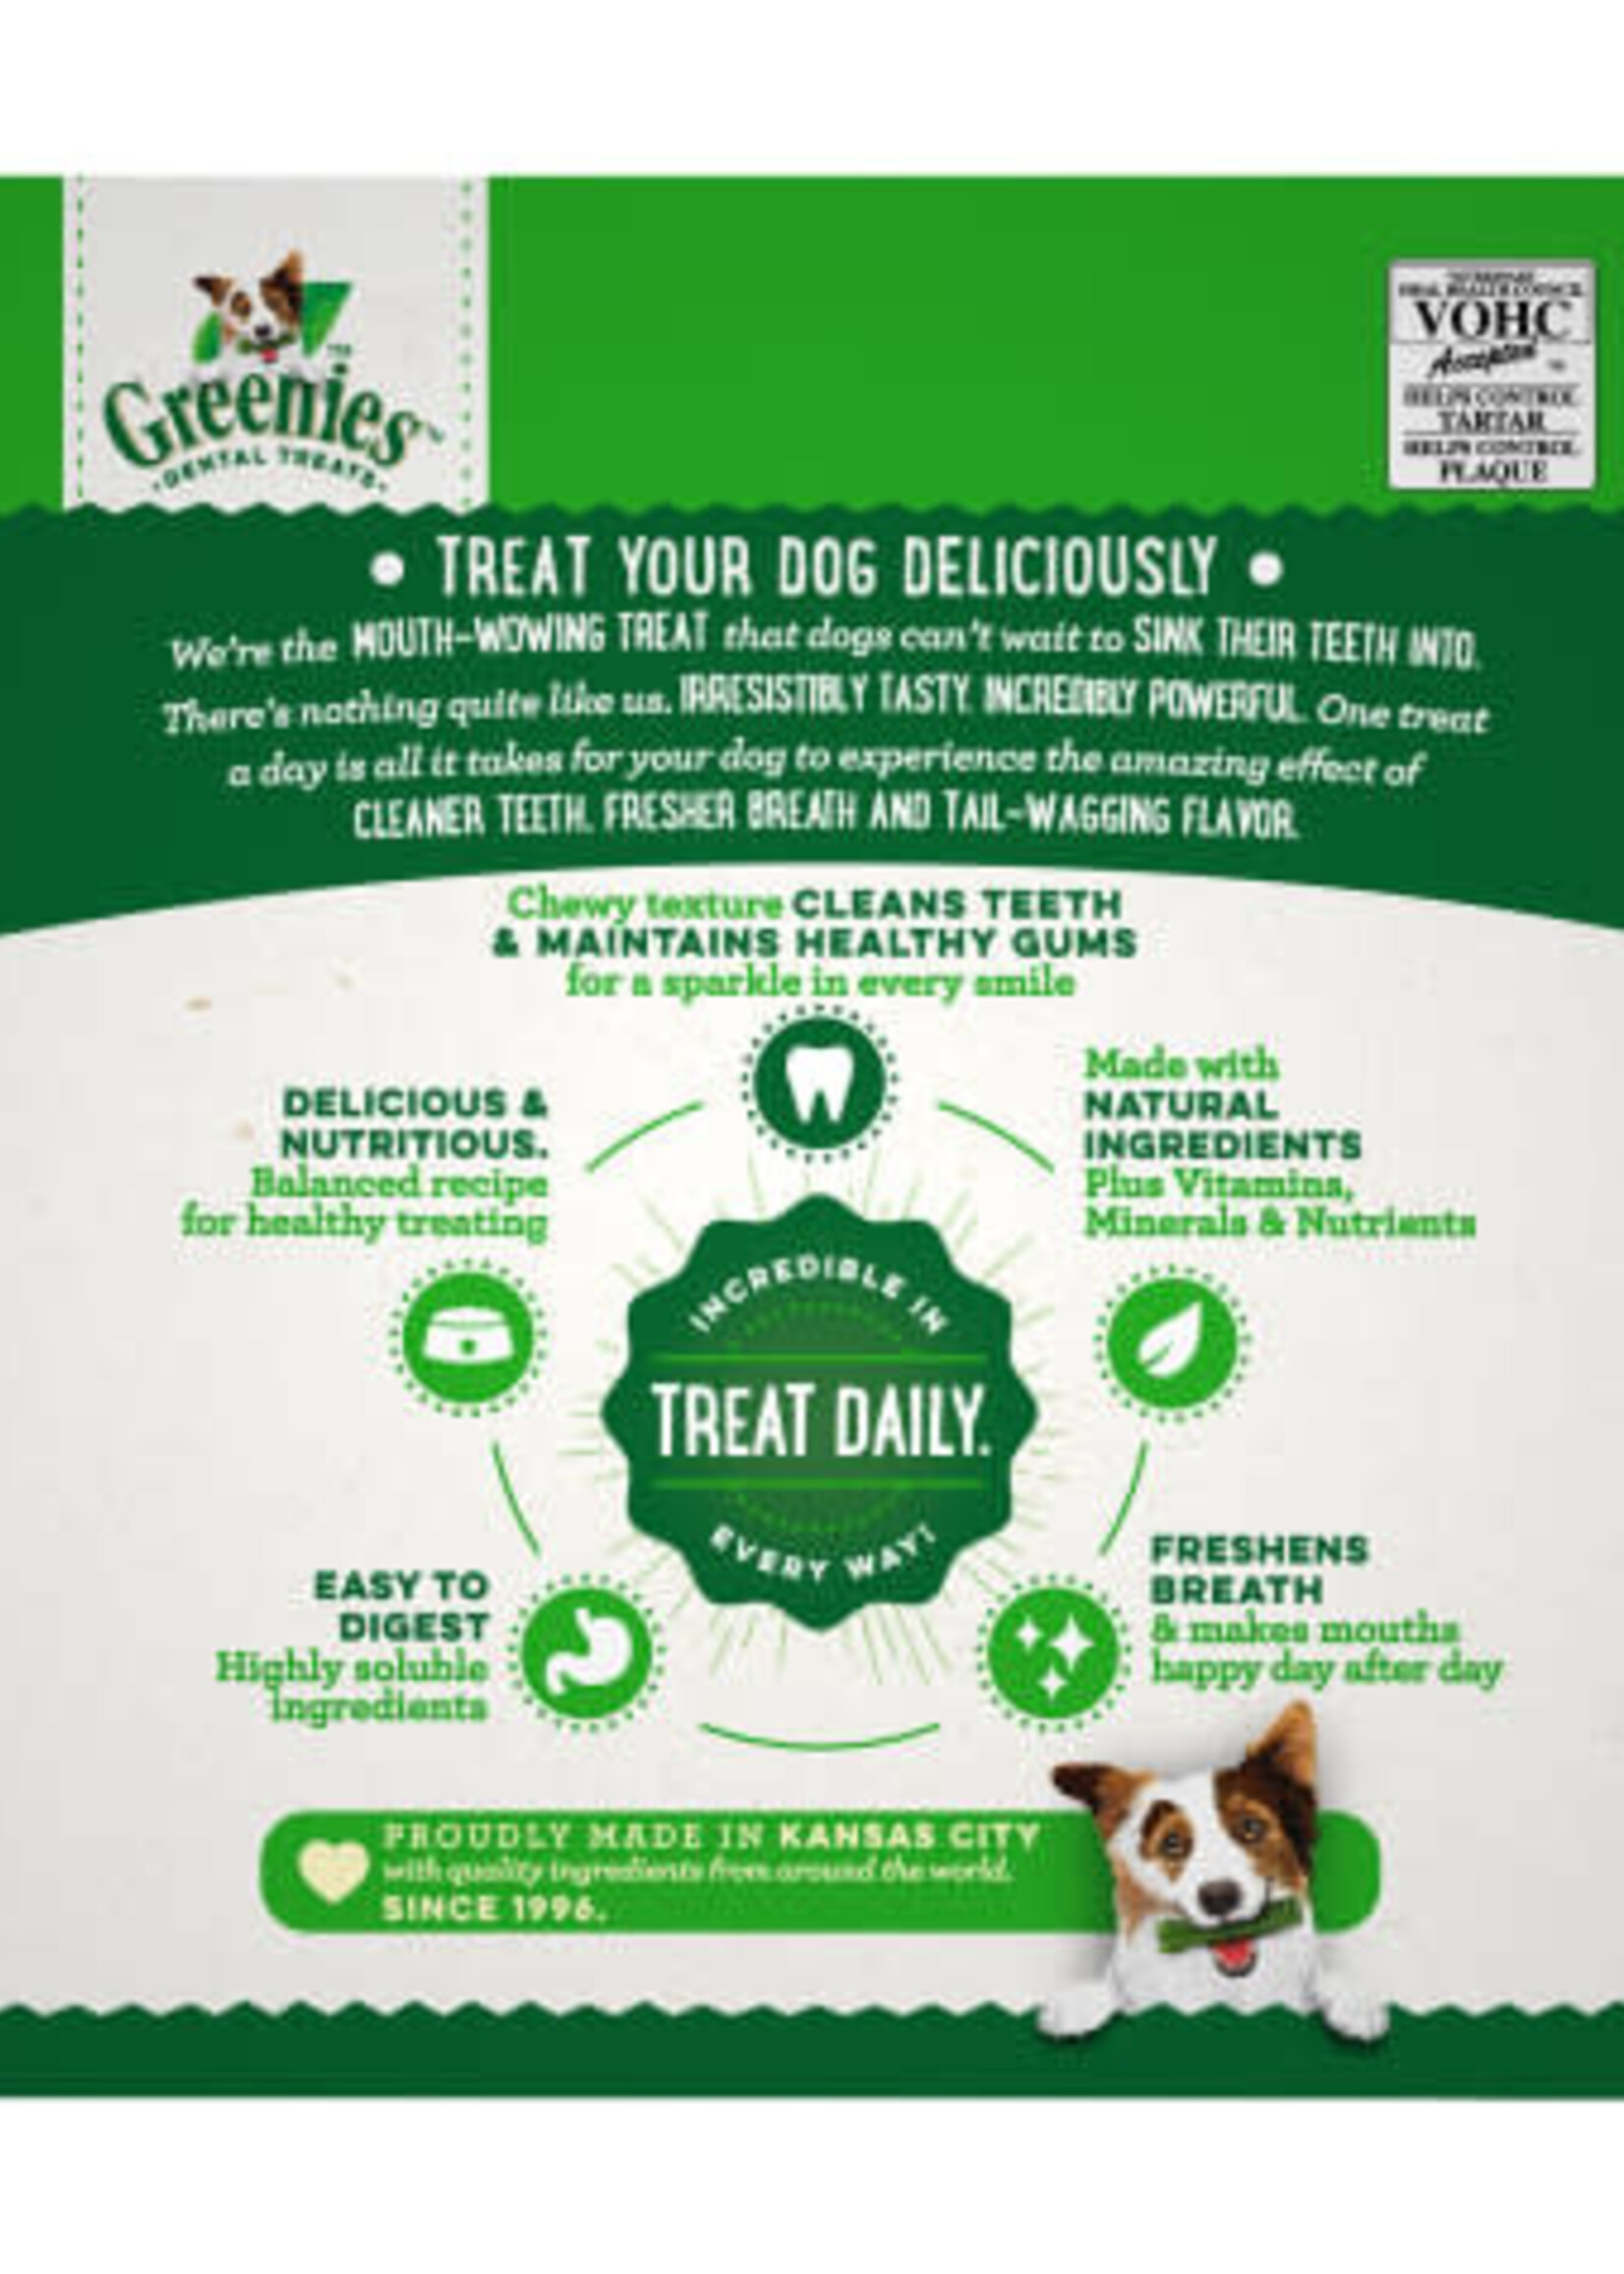 GREENIES GREENIES Original Large Dental Dog Chew Treats 36-oz (24 Count)